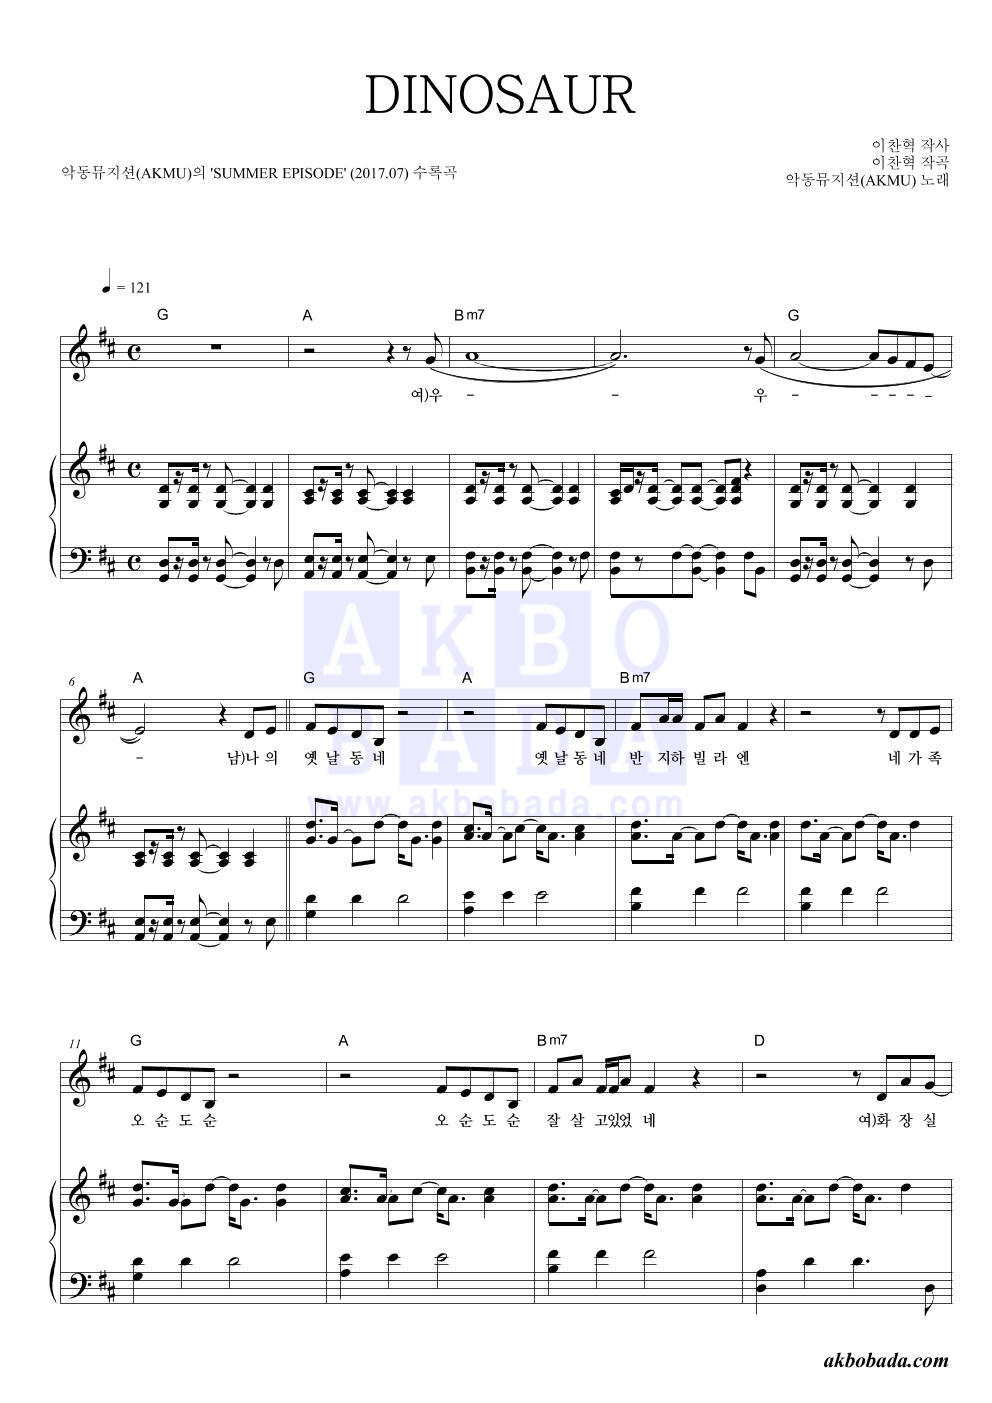 AKMU(악뮤) - DINOSAUR 피아노 3단 악보 